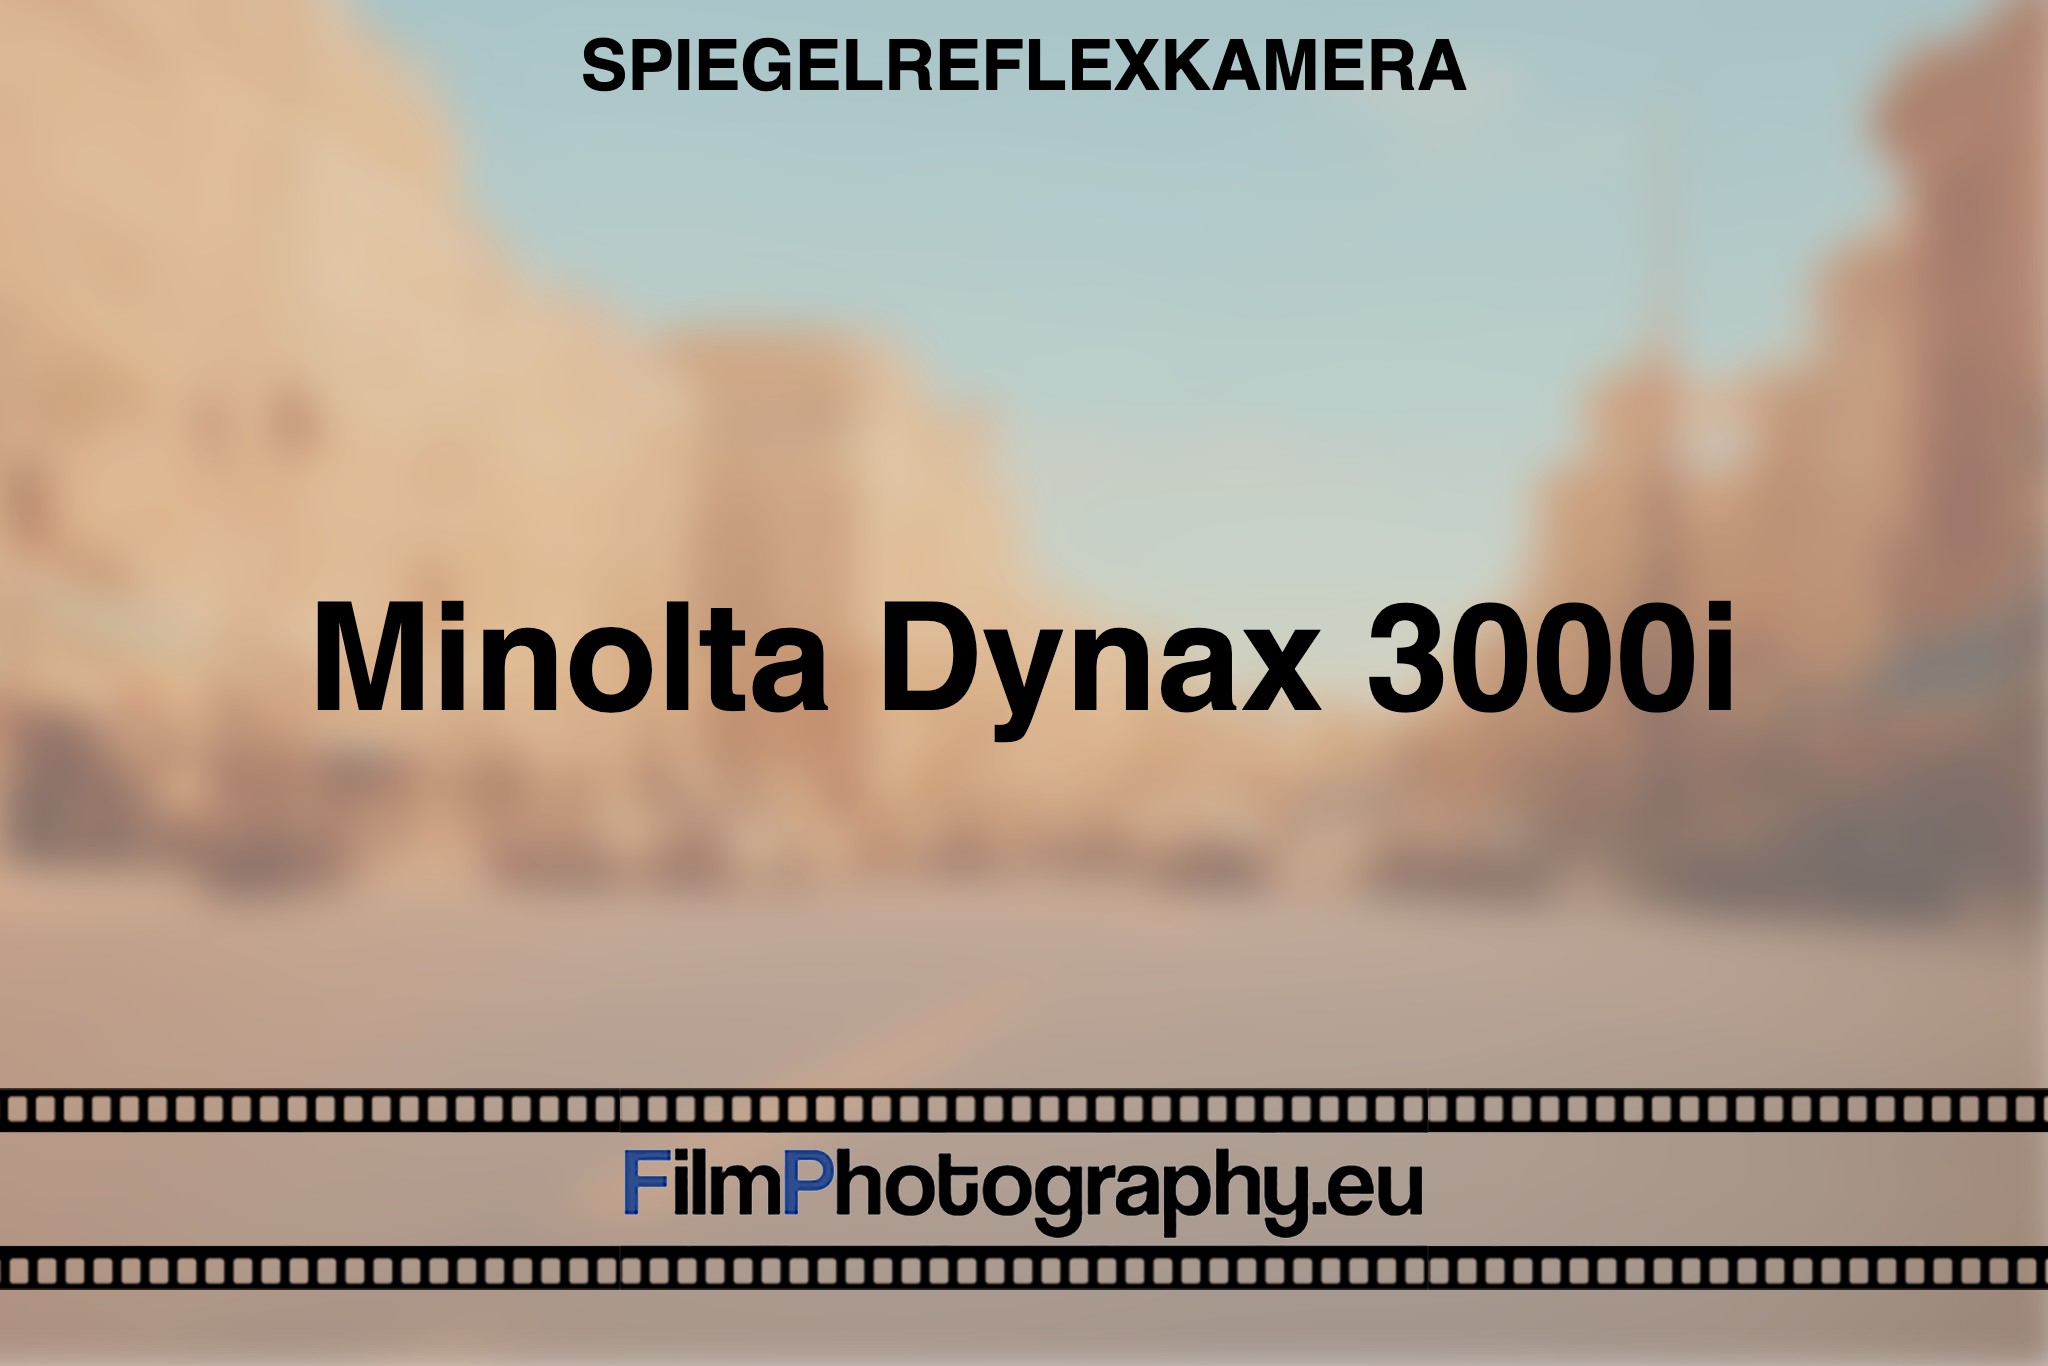 minolta-dynax-3000i-spiegelreflexkamera-bnv